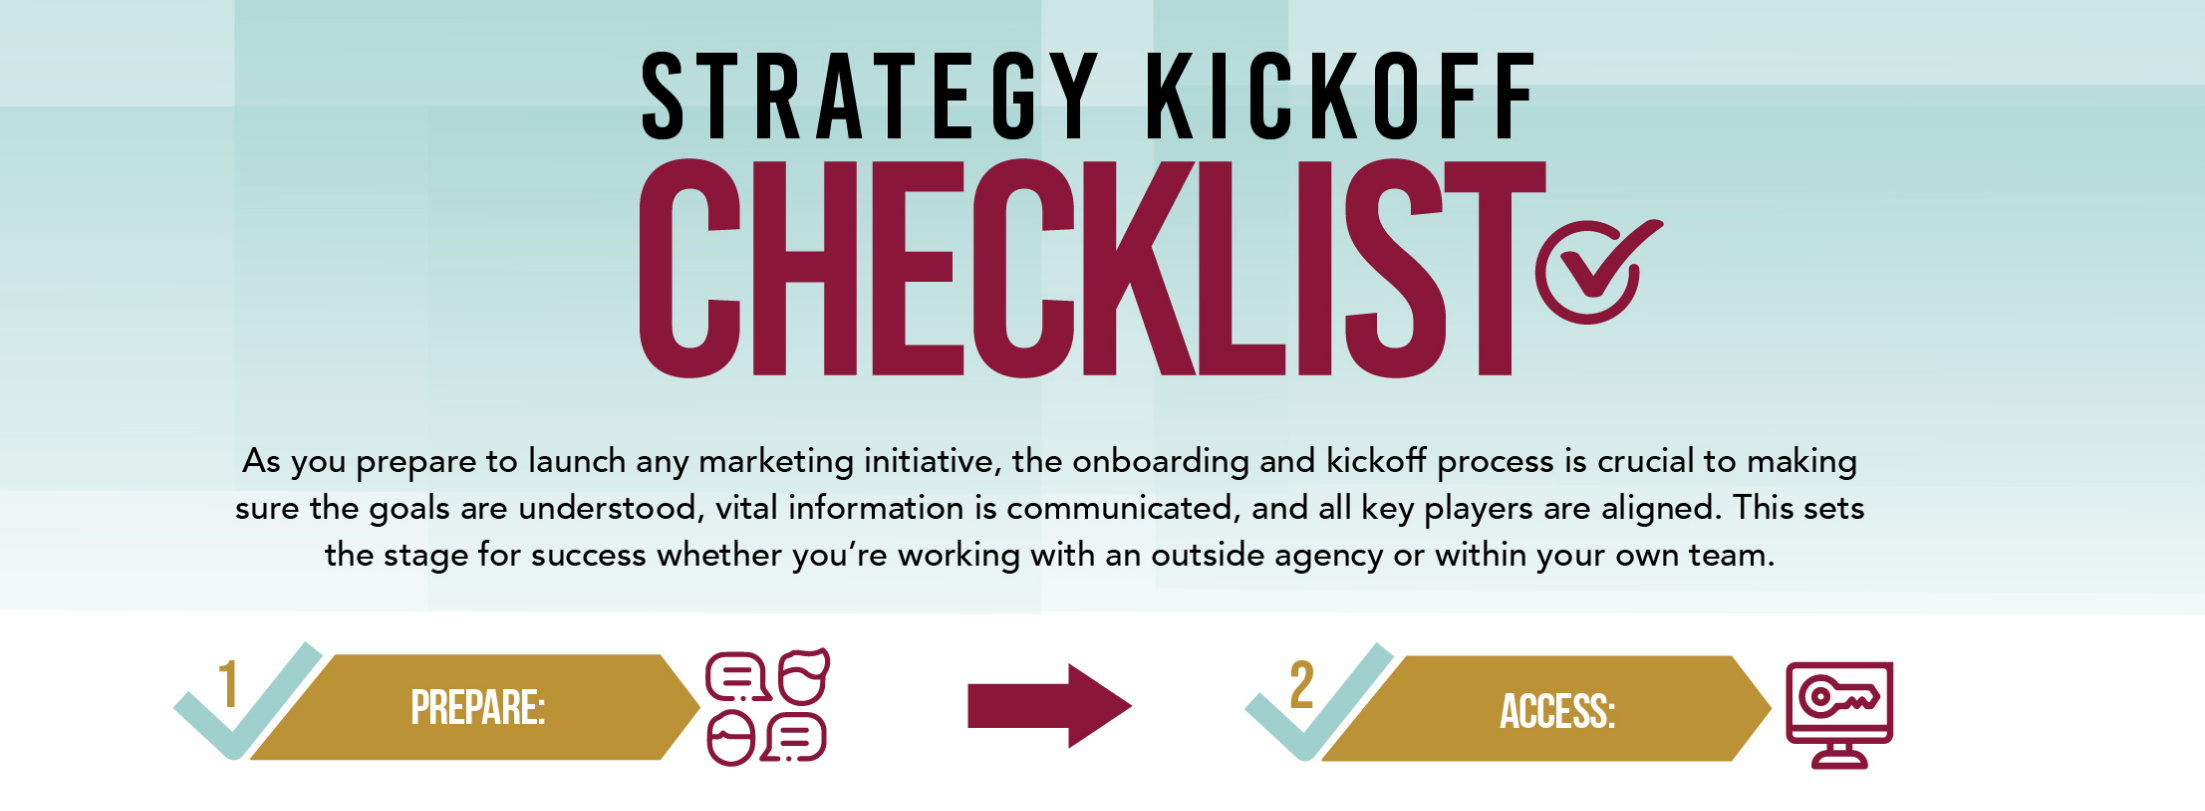 kickoff checklist